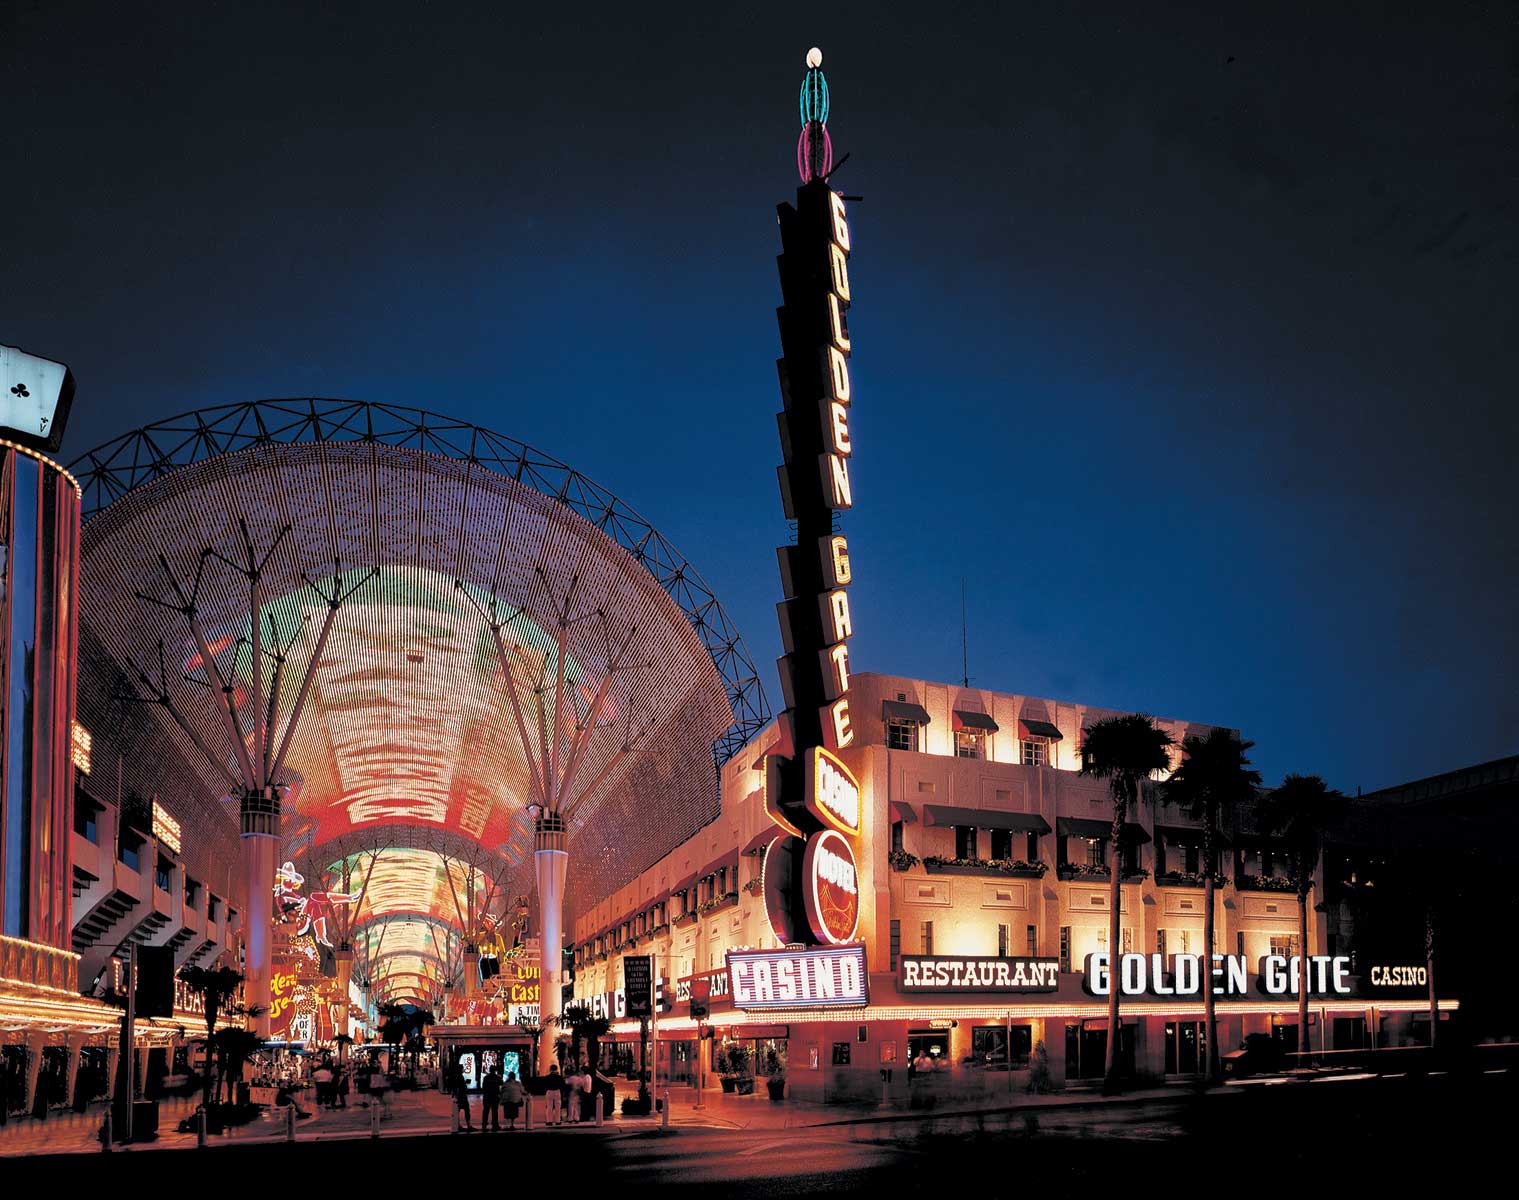 Golden Gate Hotel & Casino Las Vegas, NV AmericanCasinoGuideBook